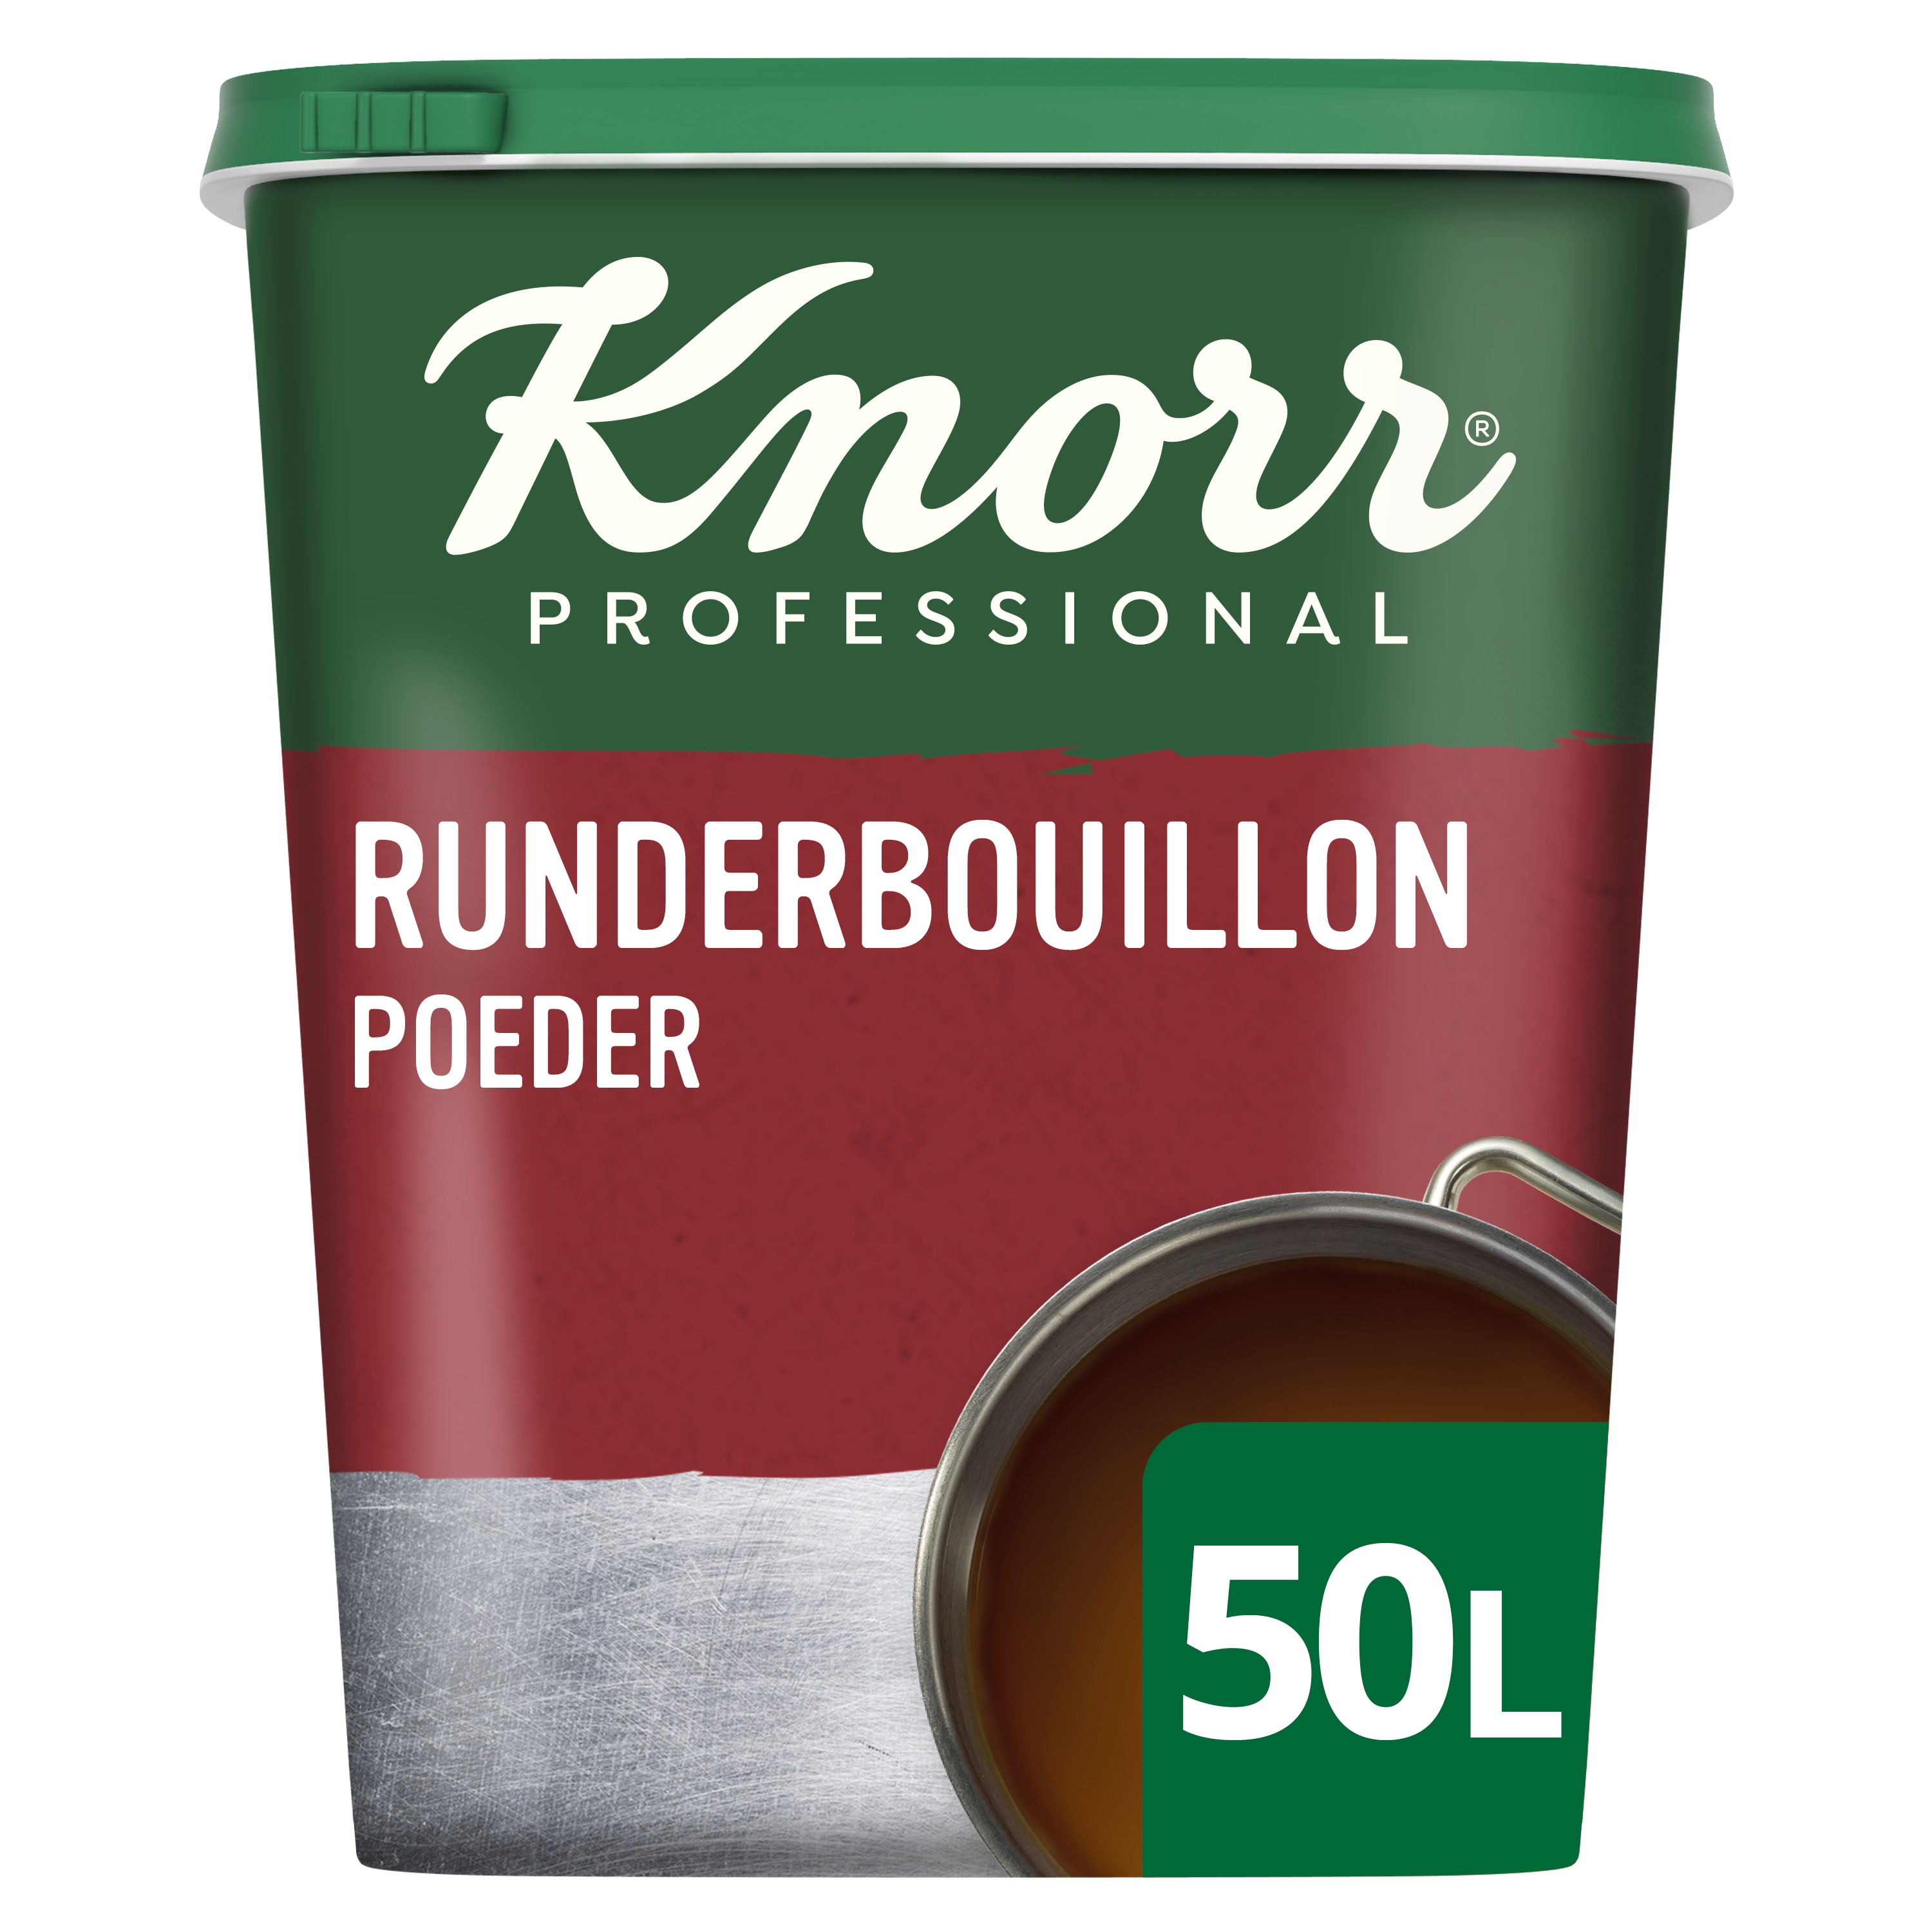 Knorr Runderbouillon Authentiek Poeder opbrengst 50L - 